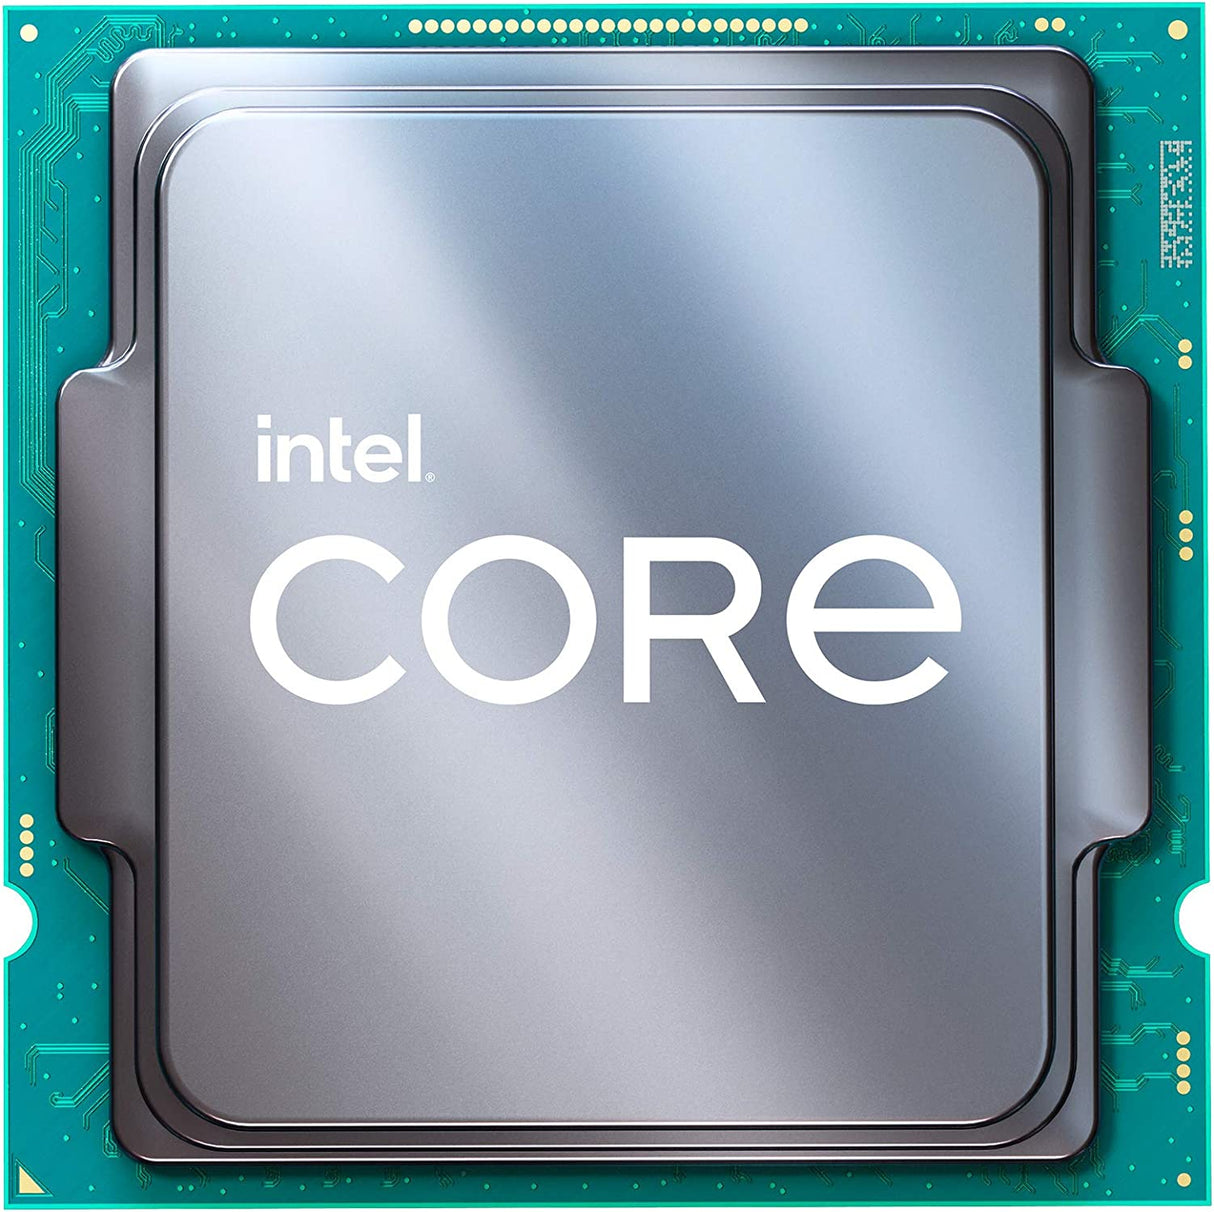 Intel® Core™ i5-11600KF Desktop Processor 6 Cores up to 4.9 GHz Unlocked LGA1200 (Intel® 500 Series &amp; Select 400 Series Chipset) 125W